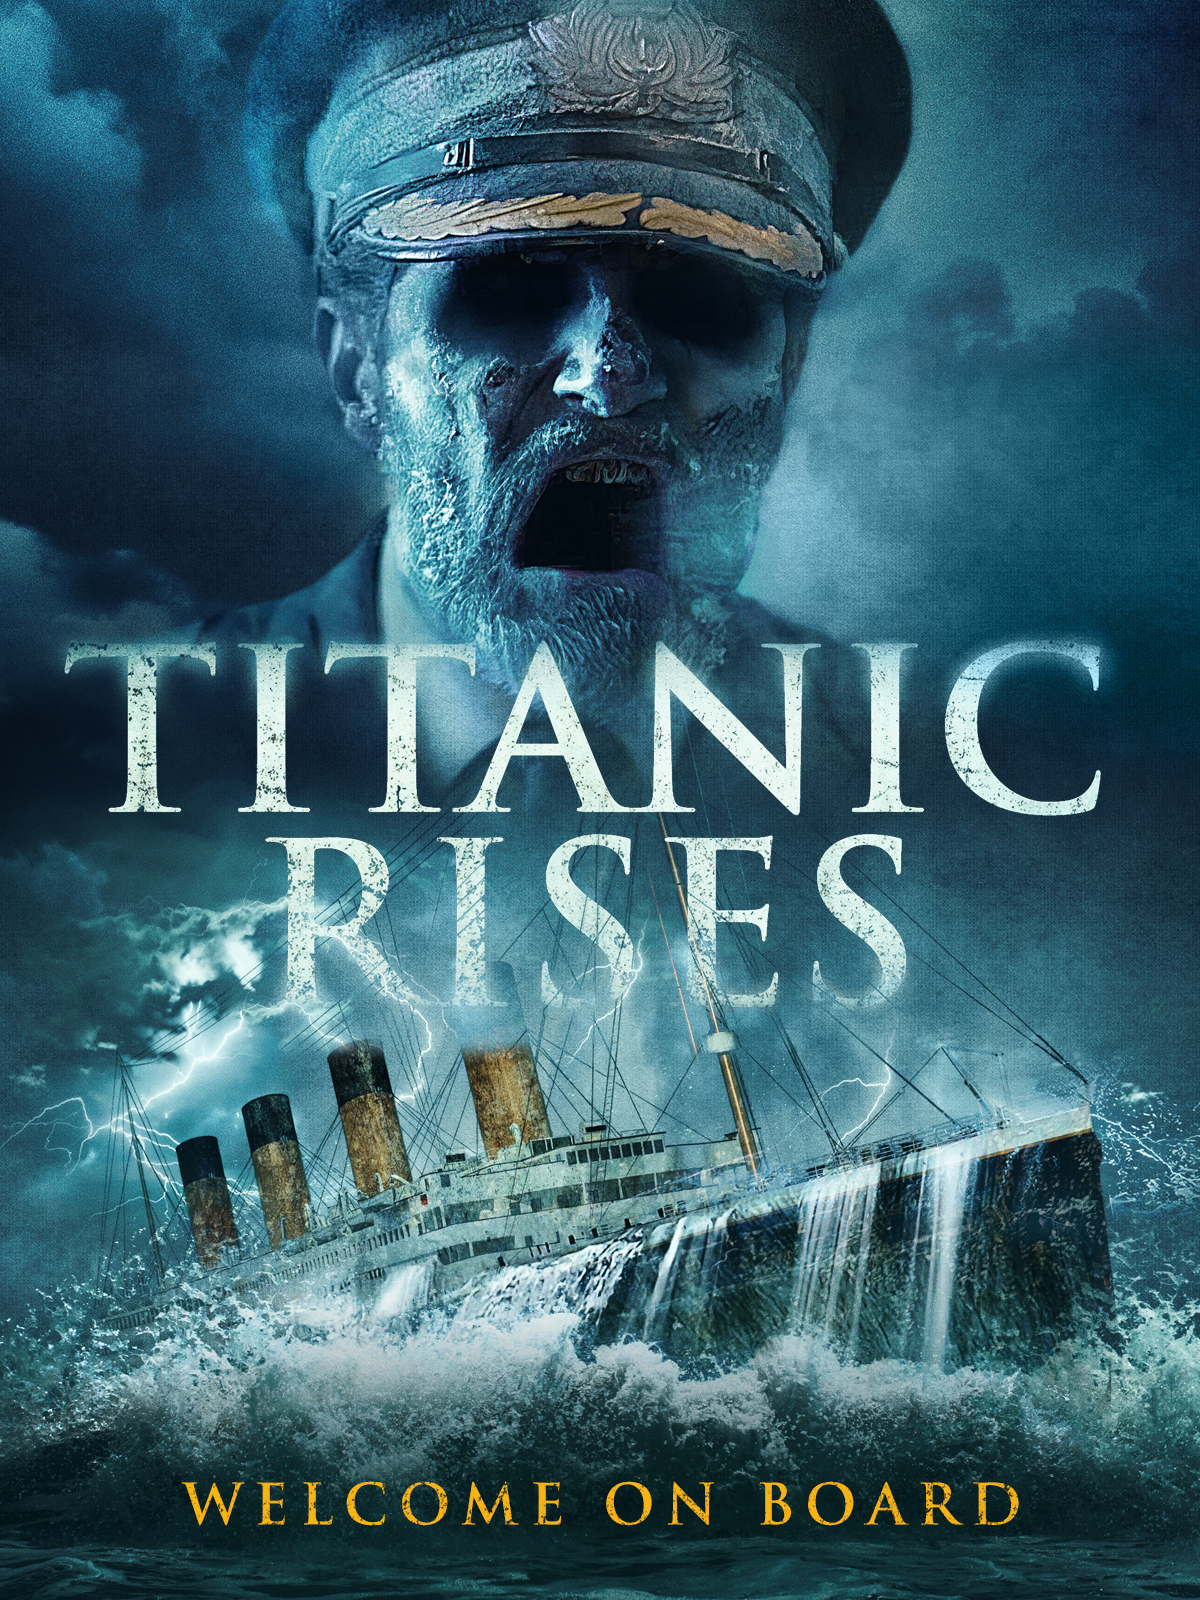 titanic_rises_amazon_3x4_cover_art_1200x1600